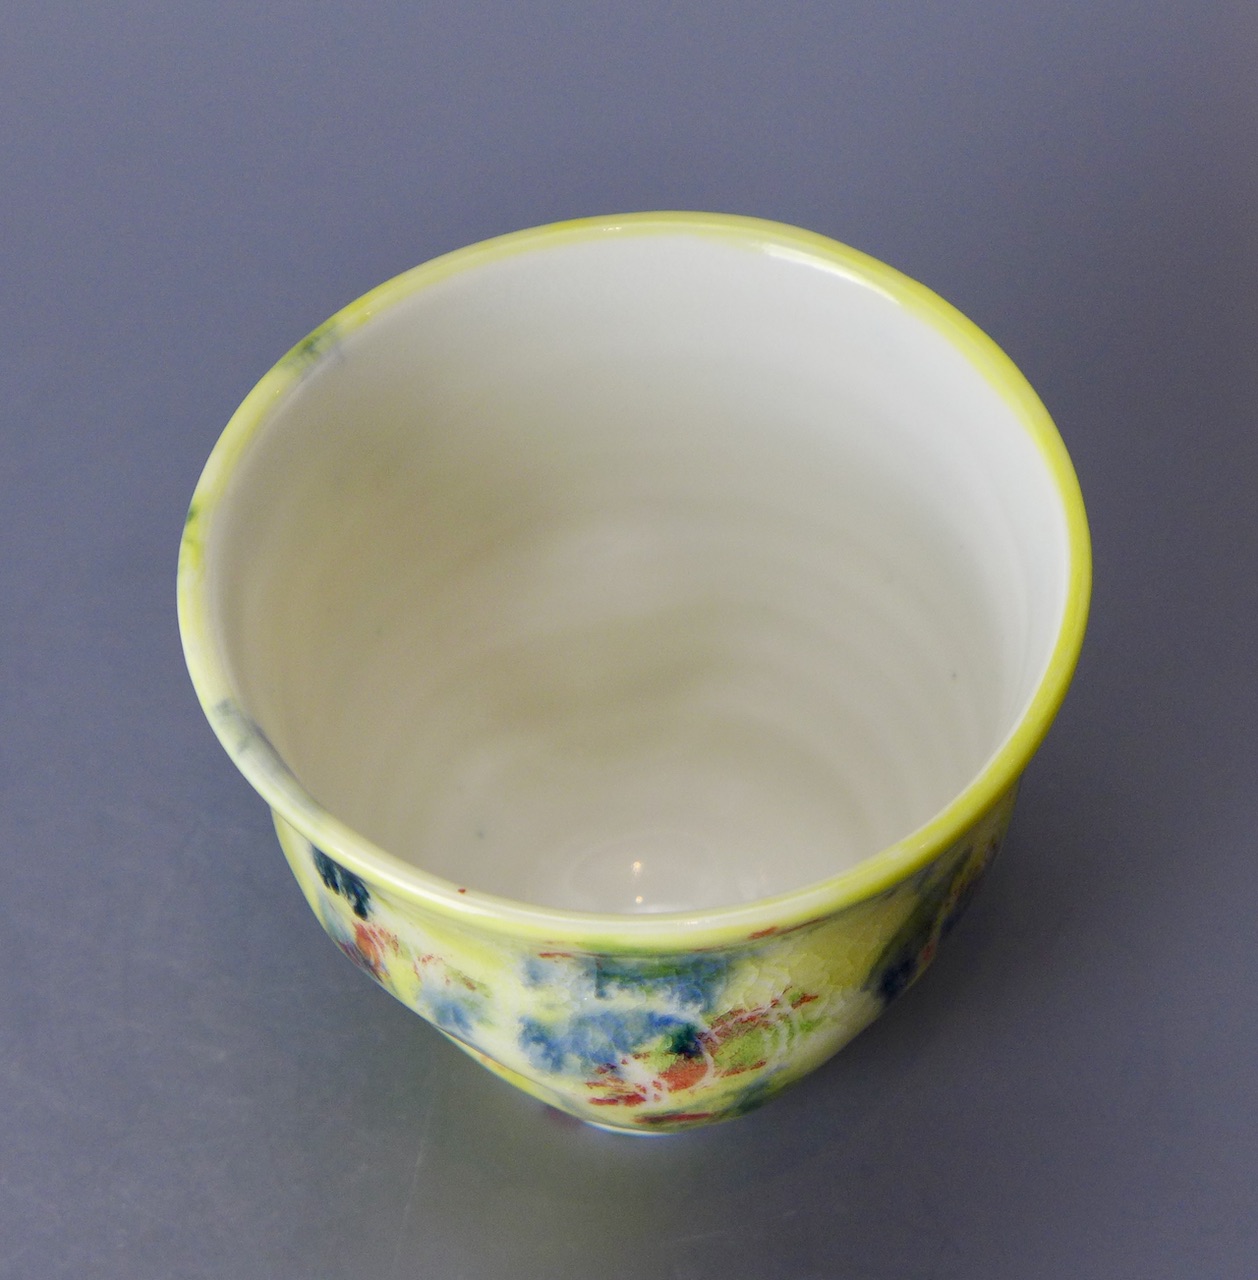 Yellows Tea Bowl with Narrower base